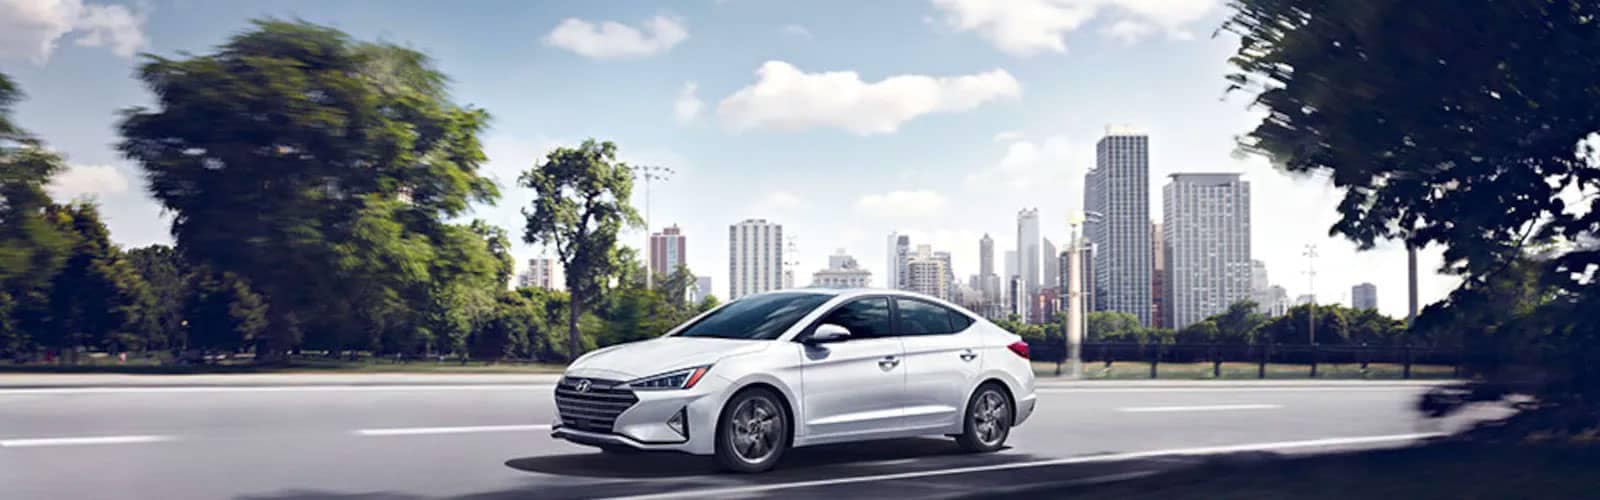 White-Hyundai-sedan-driving-outside-the-city